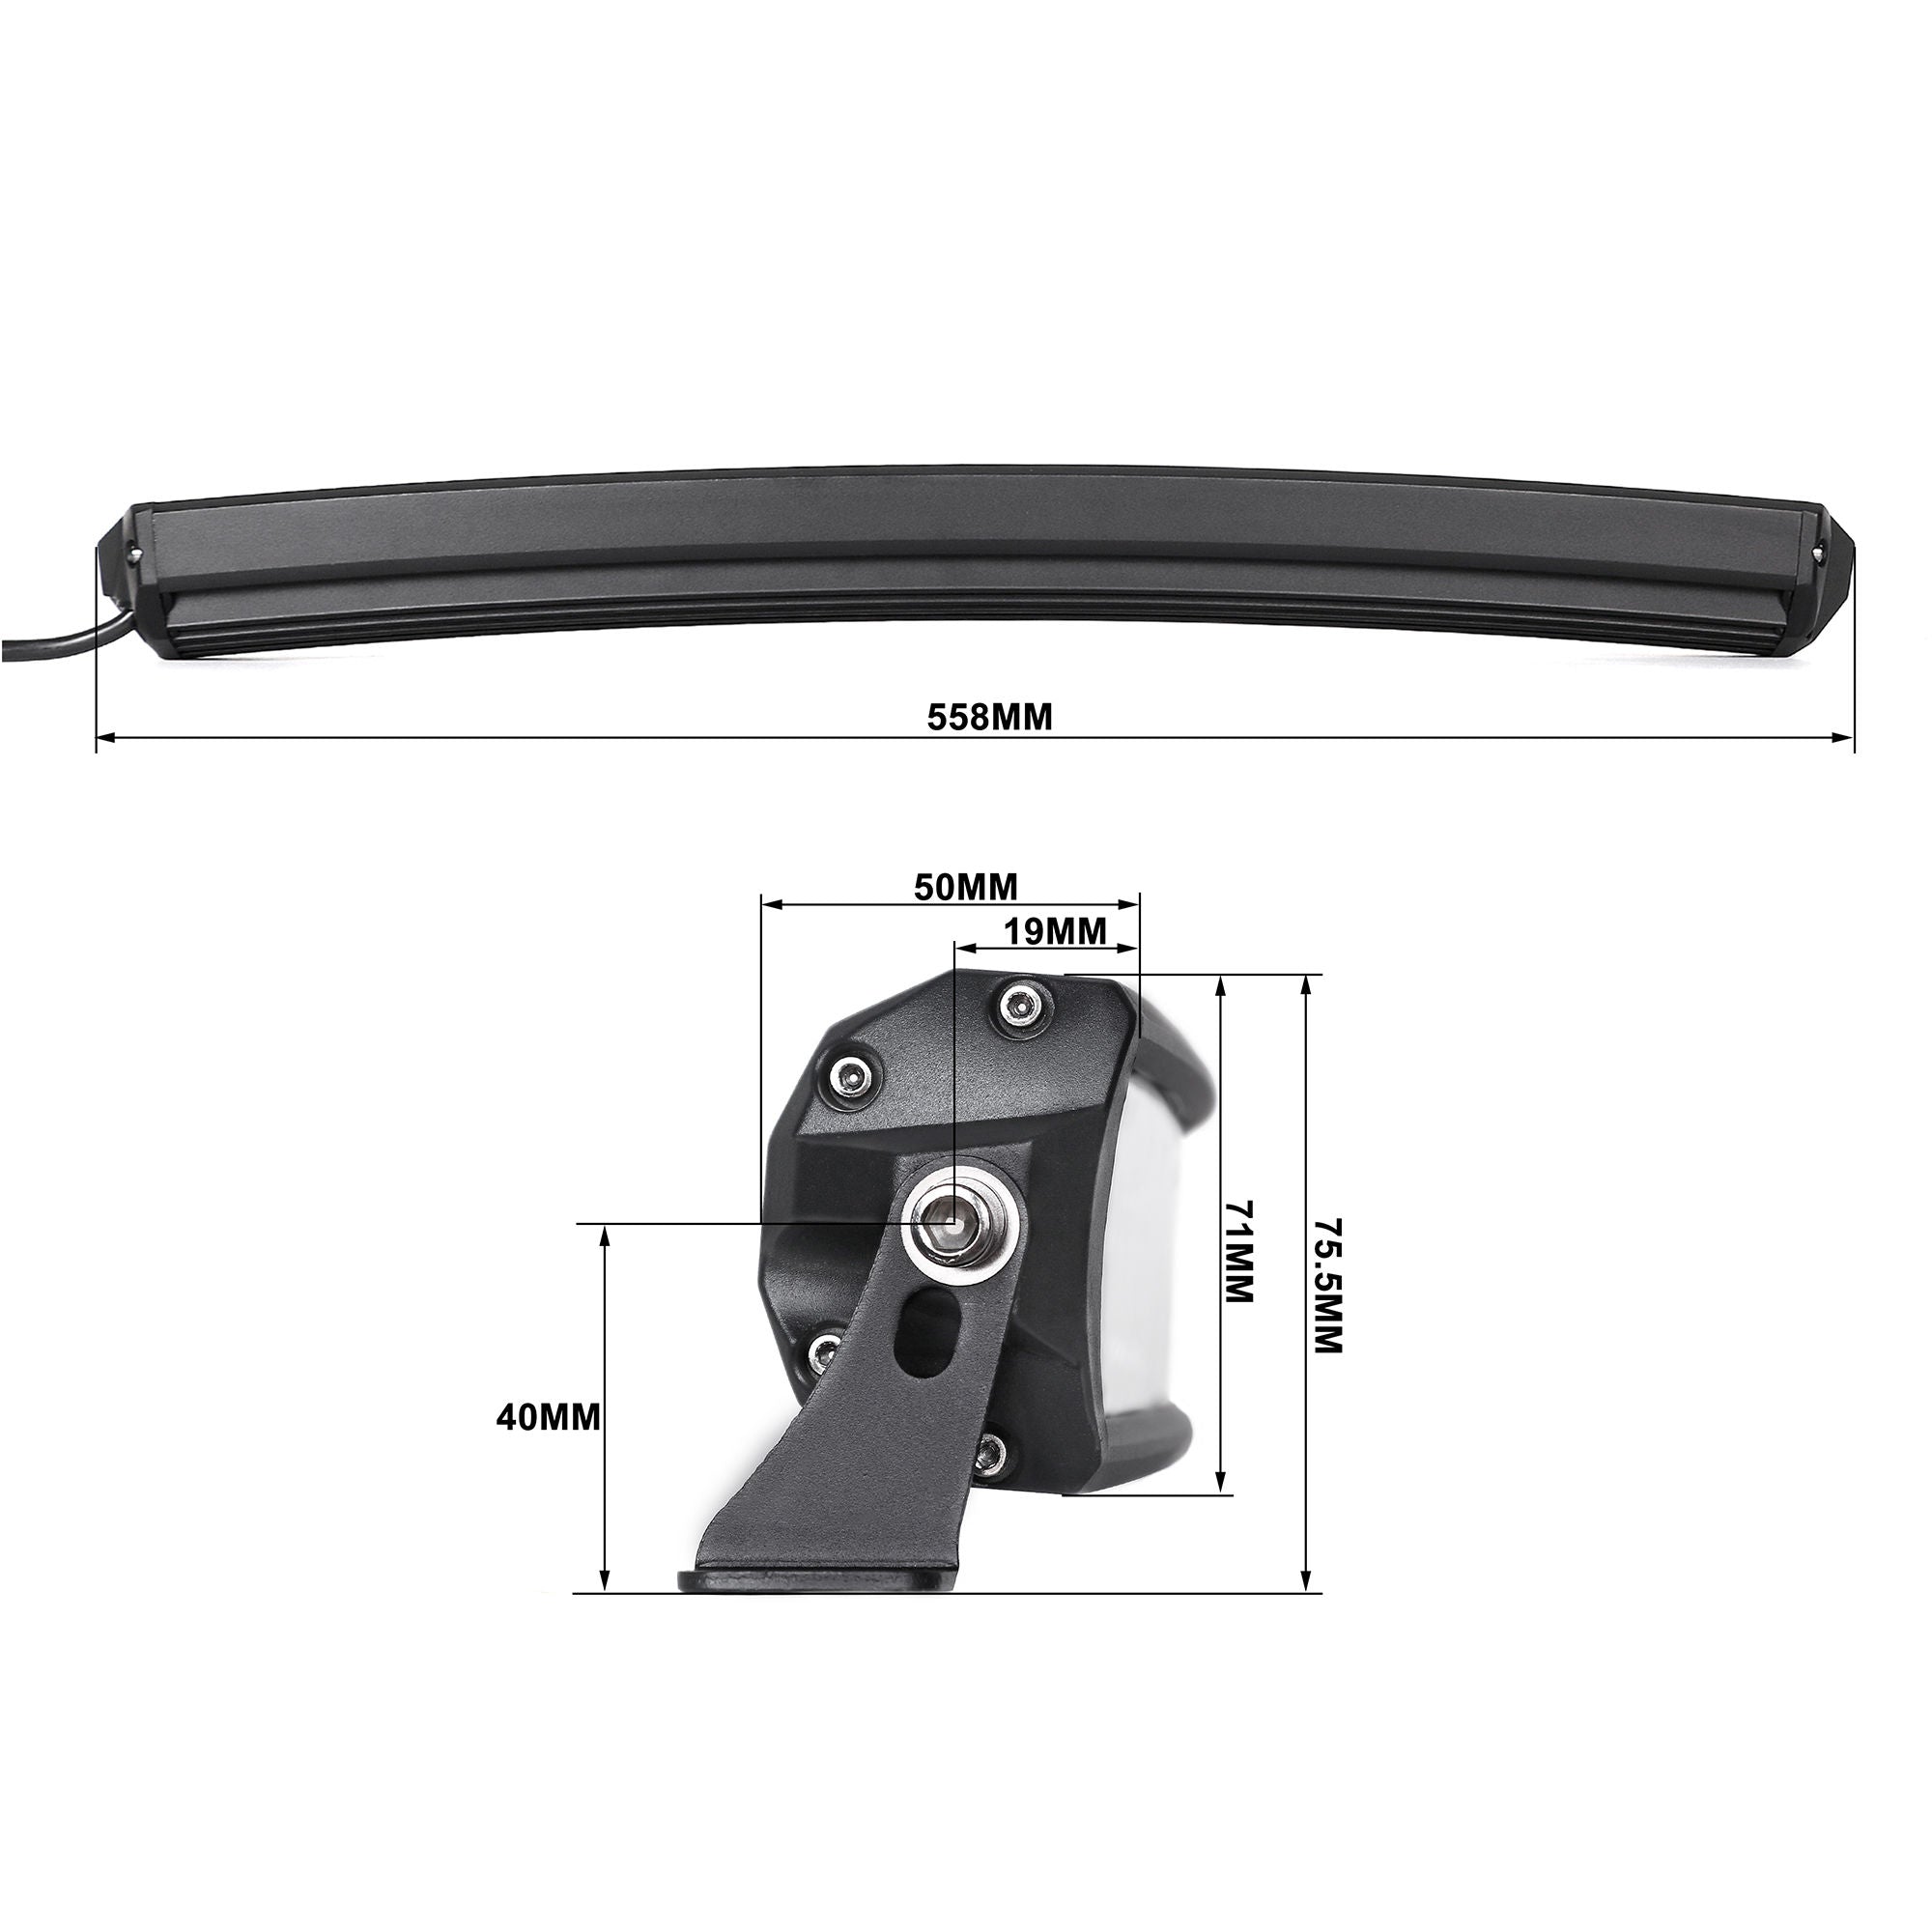 RTXOA49B810 - Dual Row Light Bar, 6W Osram, No Screw Front Frame, Reflector, Combo, 20", 7982